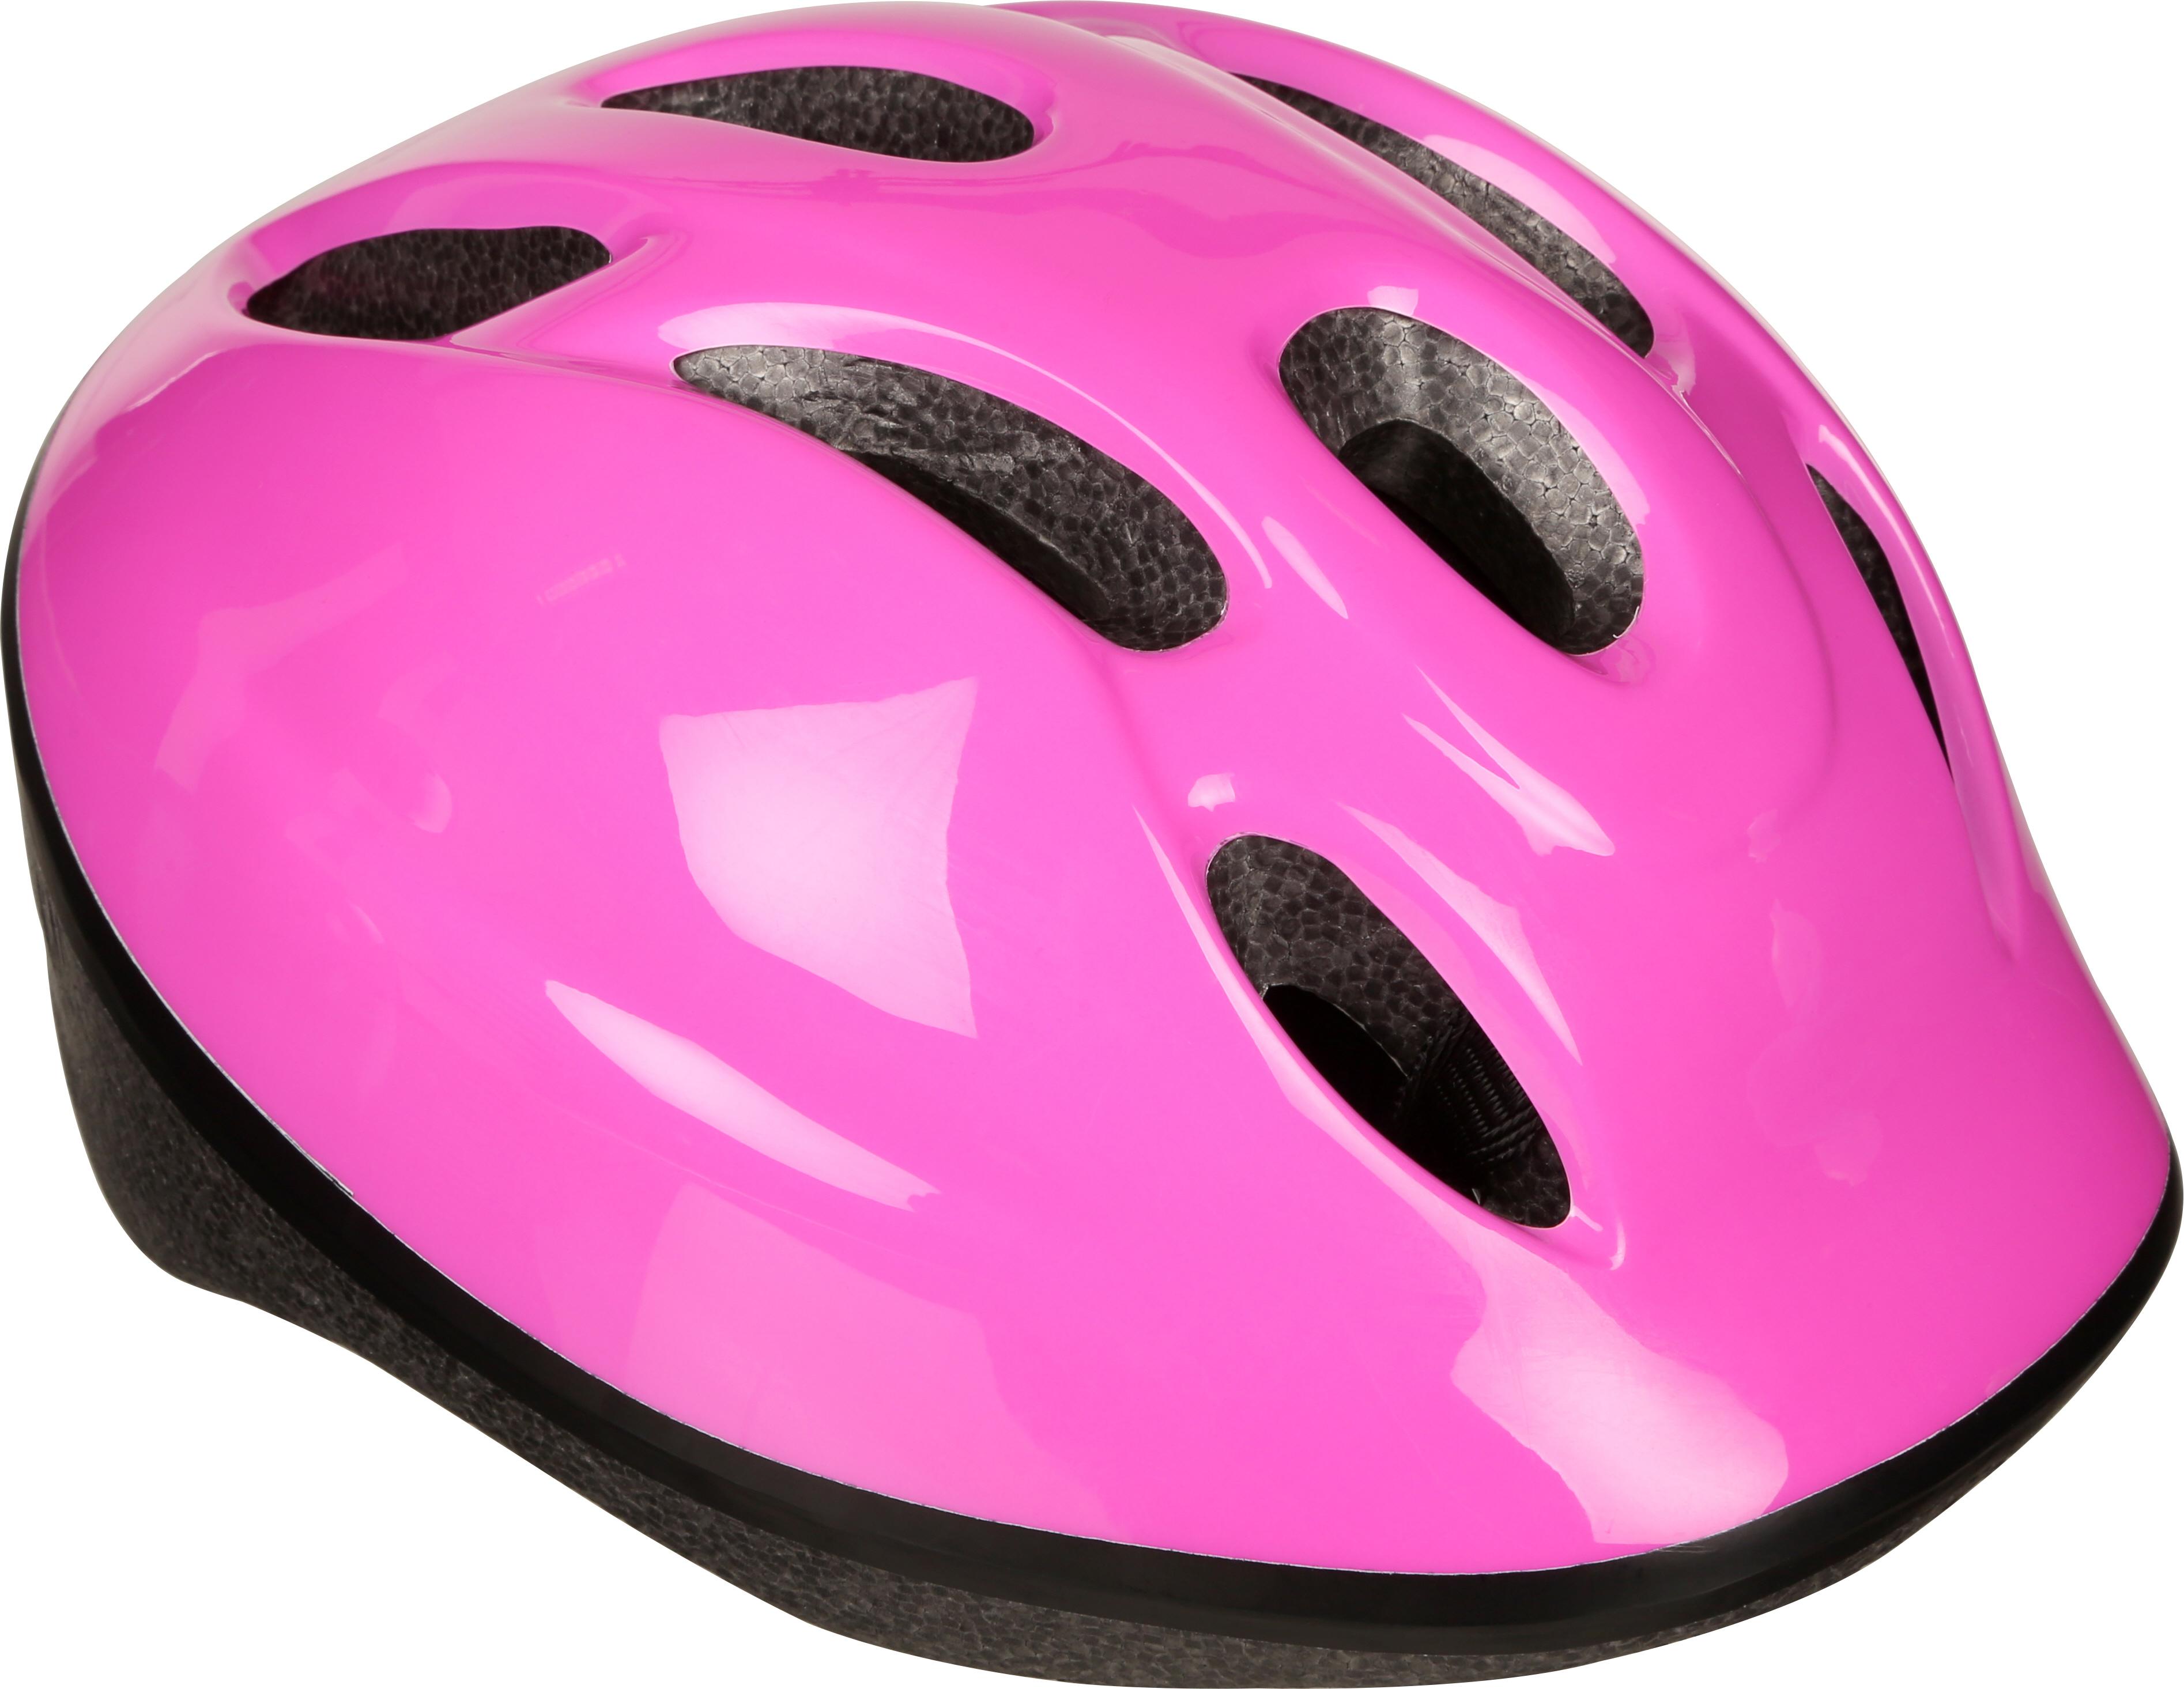 Kids Bike Helmet - Pink - 48-54cm, 50 